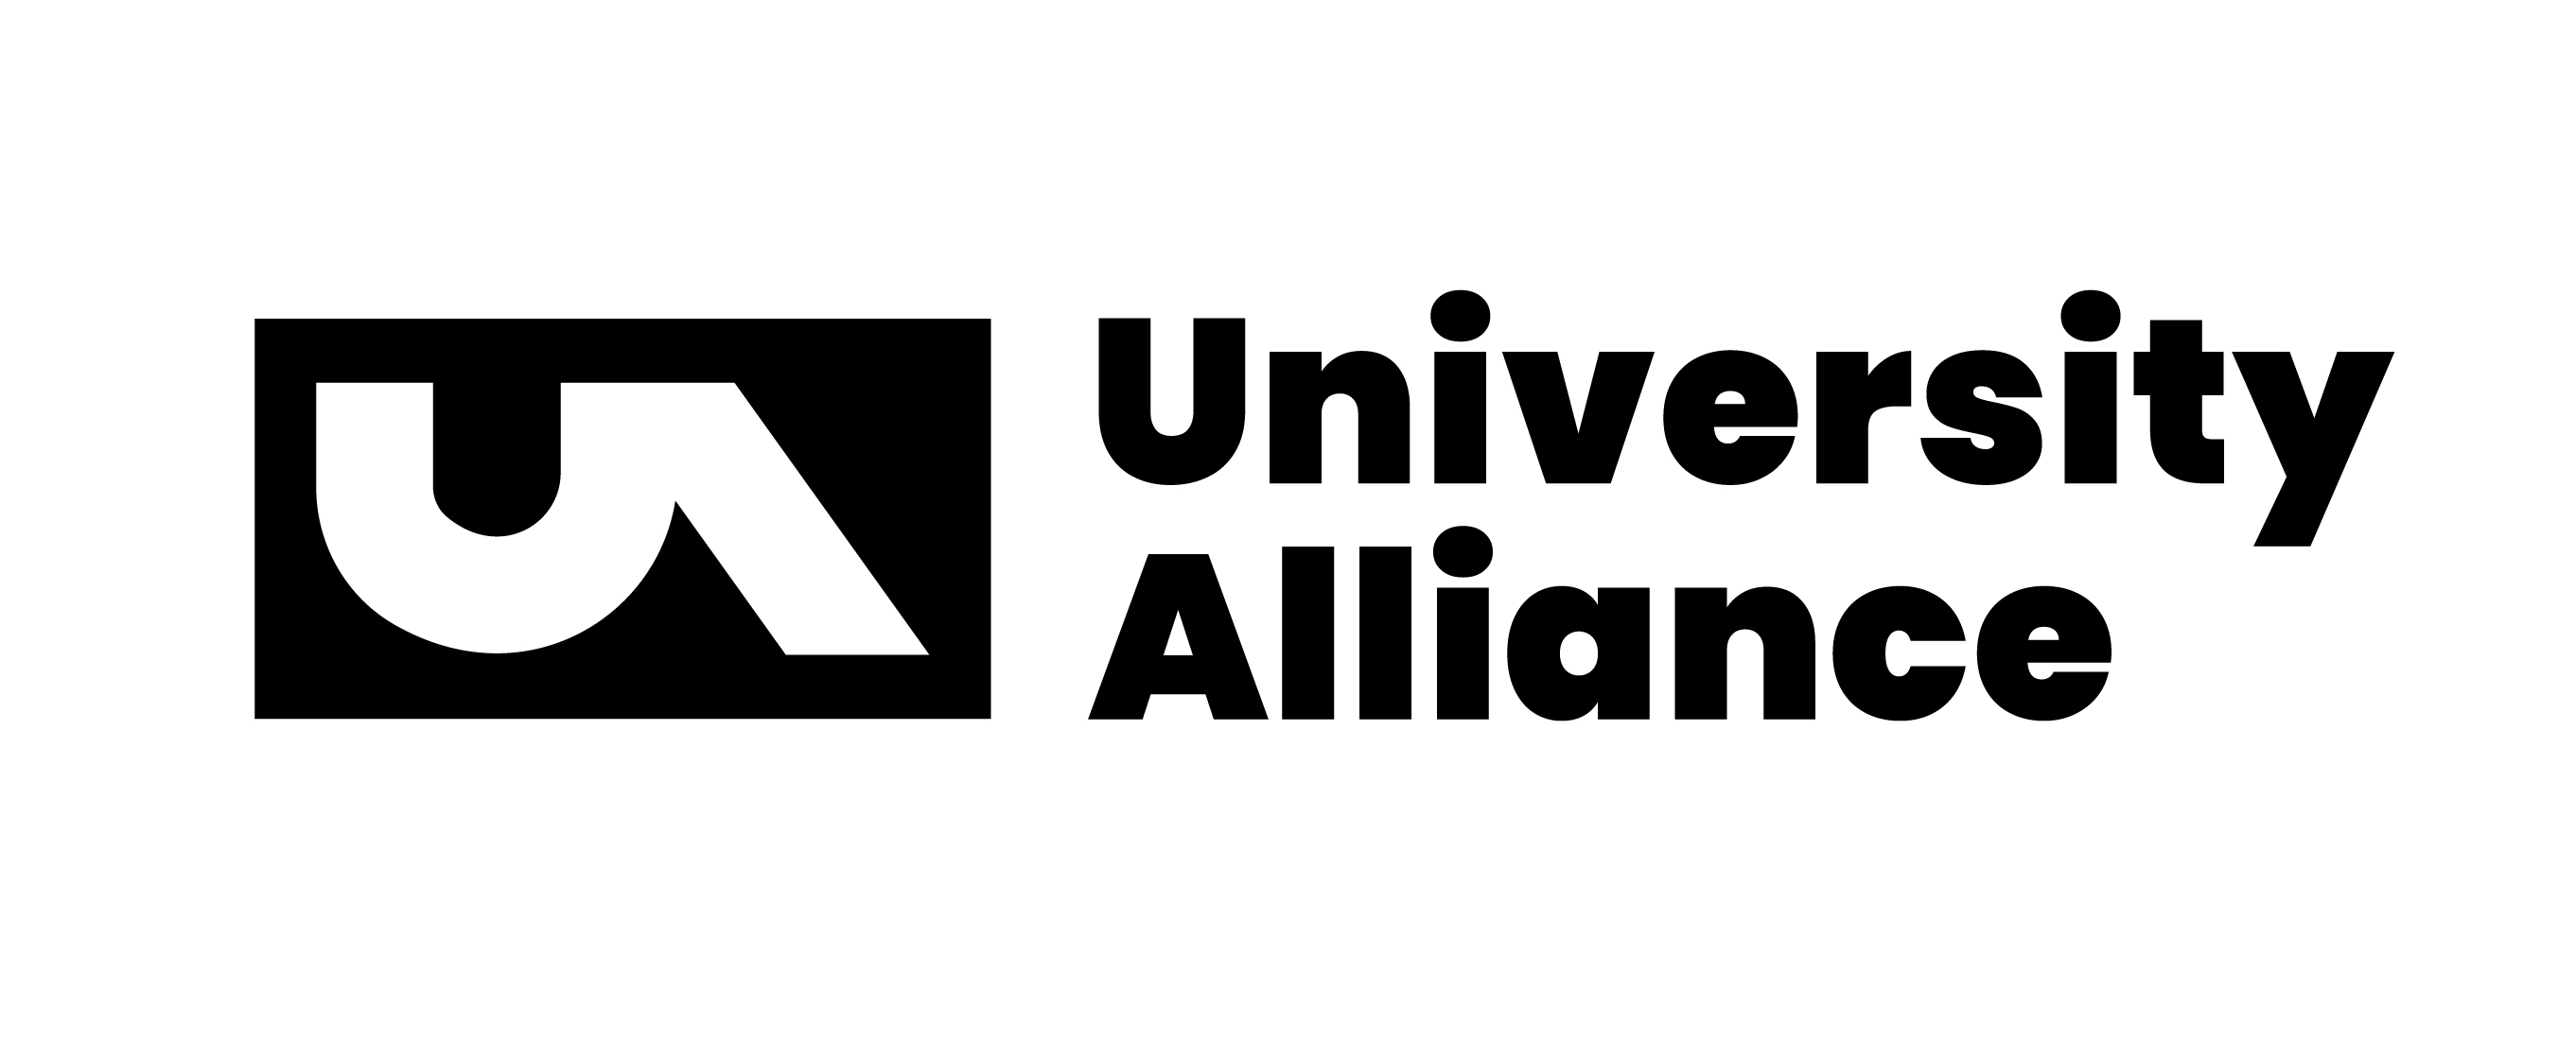 Black University Alliance logo